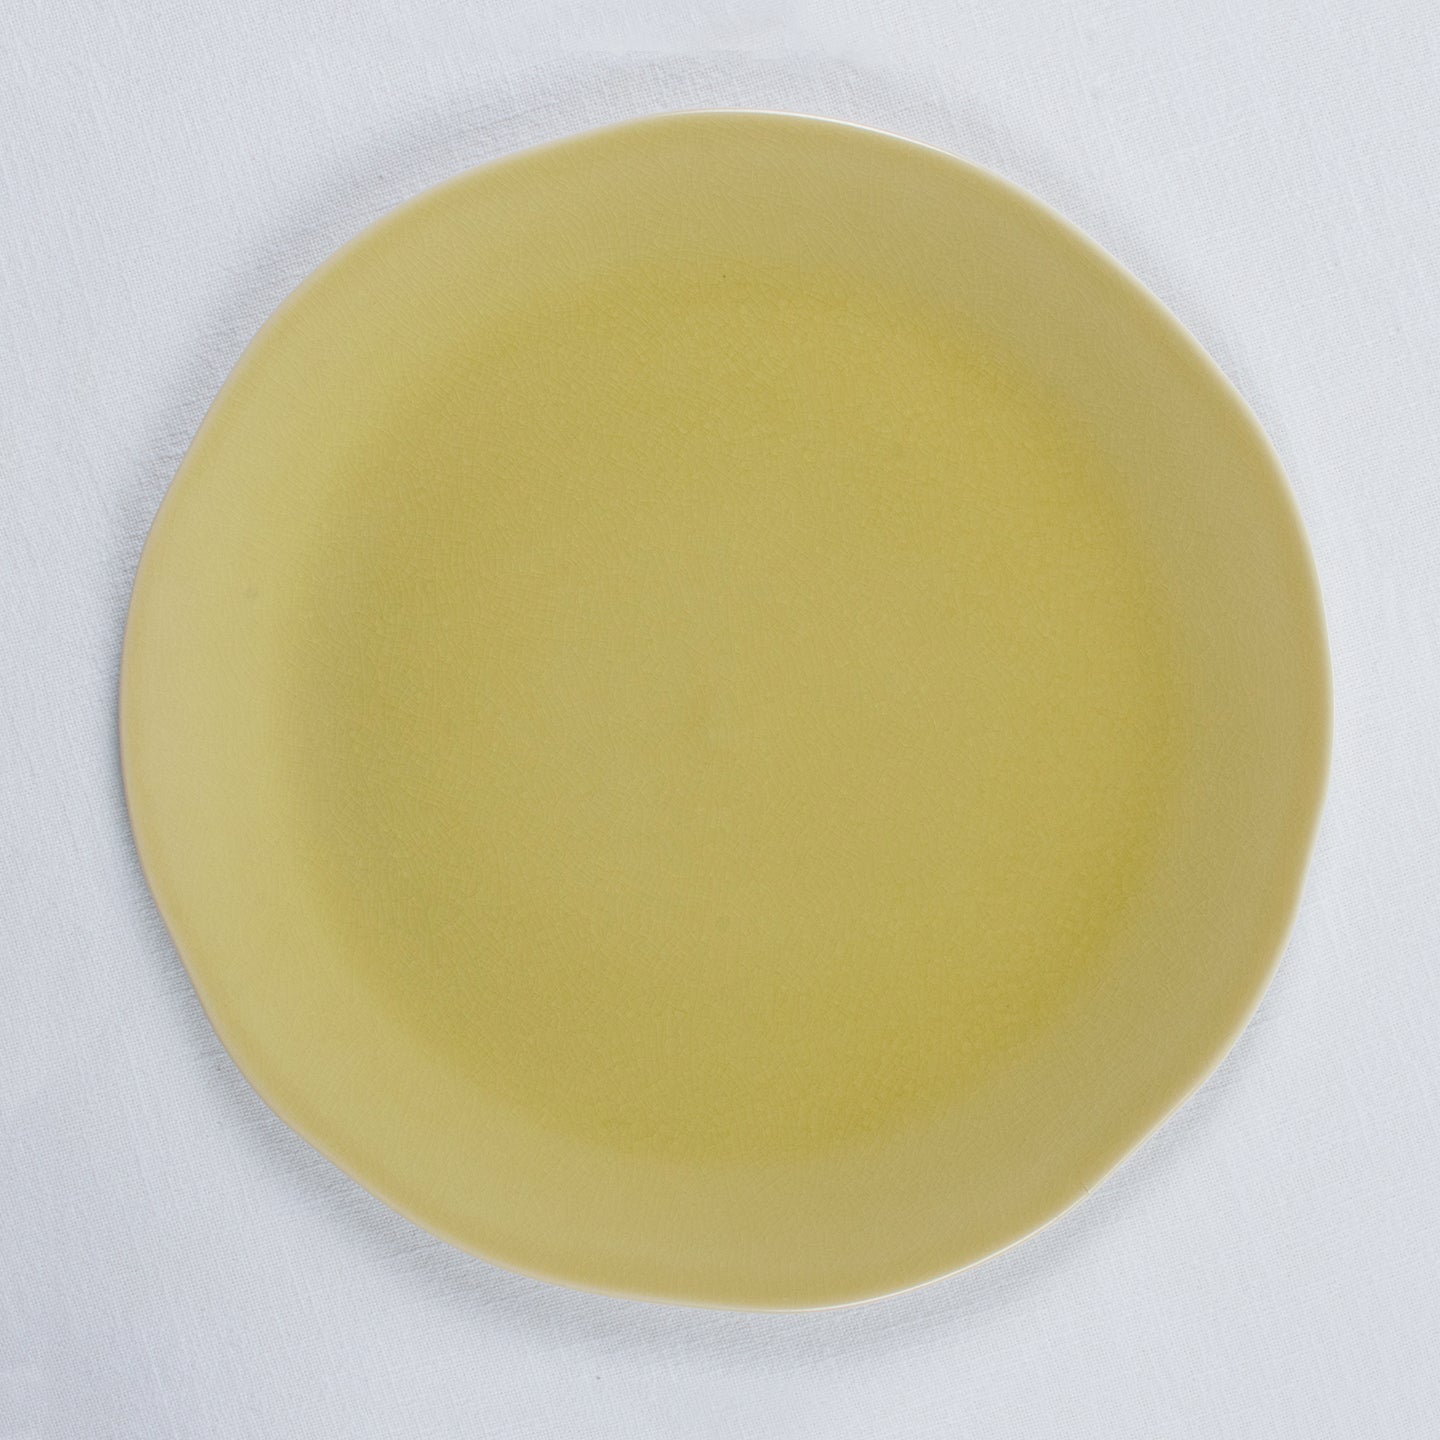 Jars Maguelone Serving Plate / 31cm / Genet